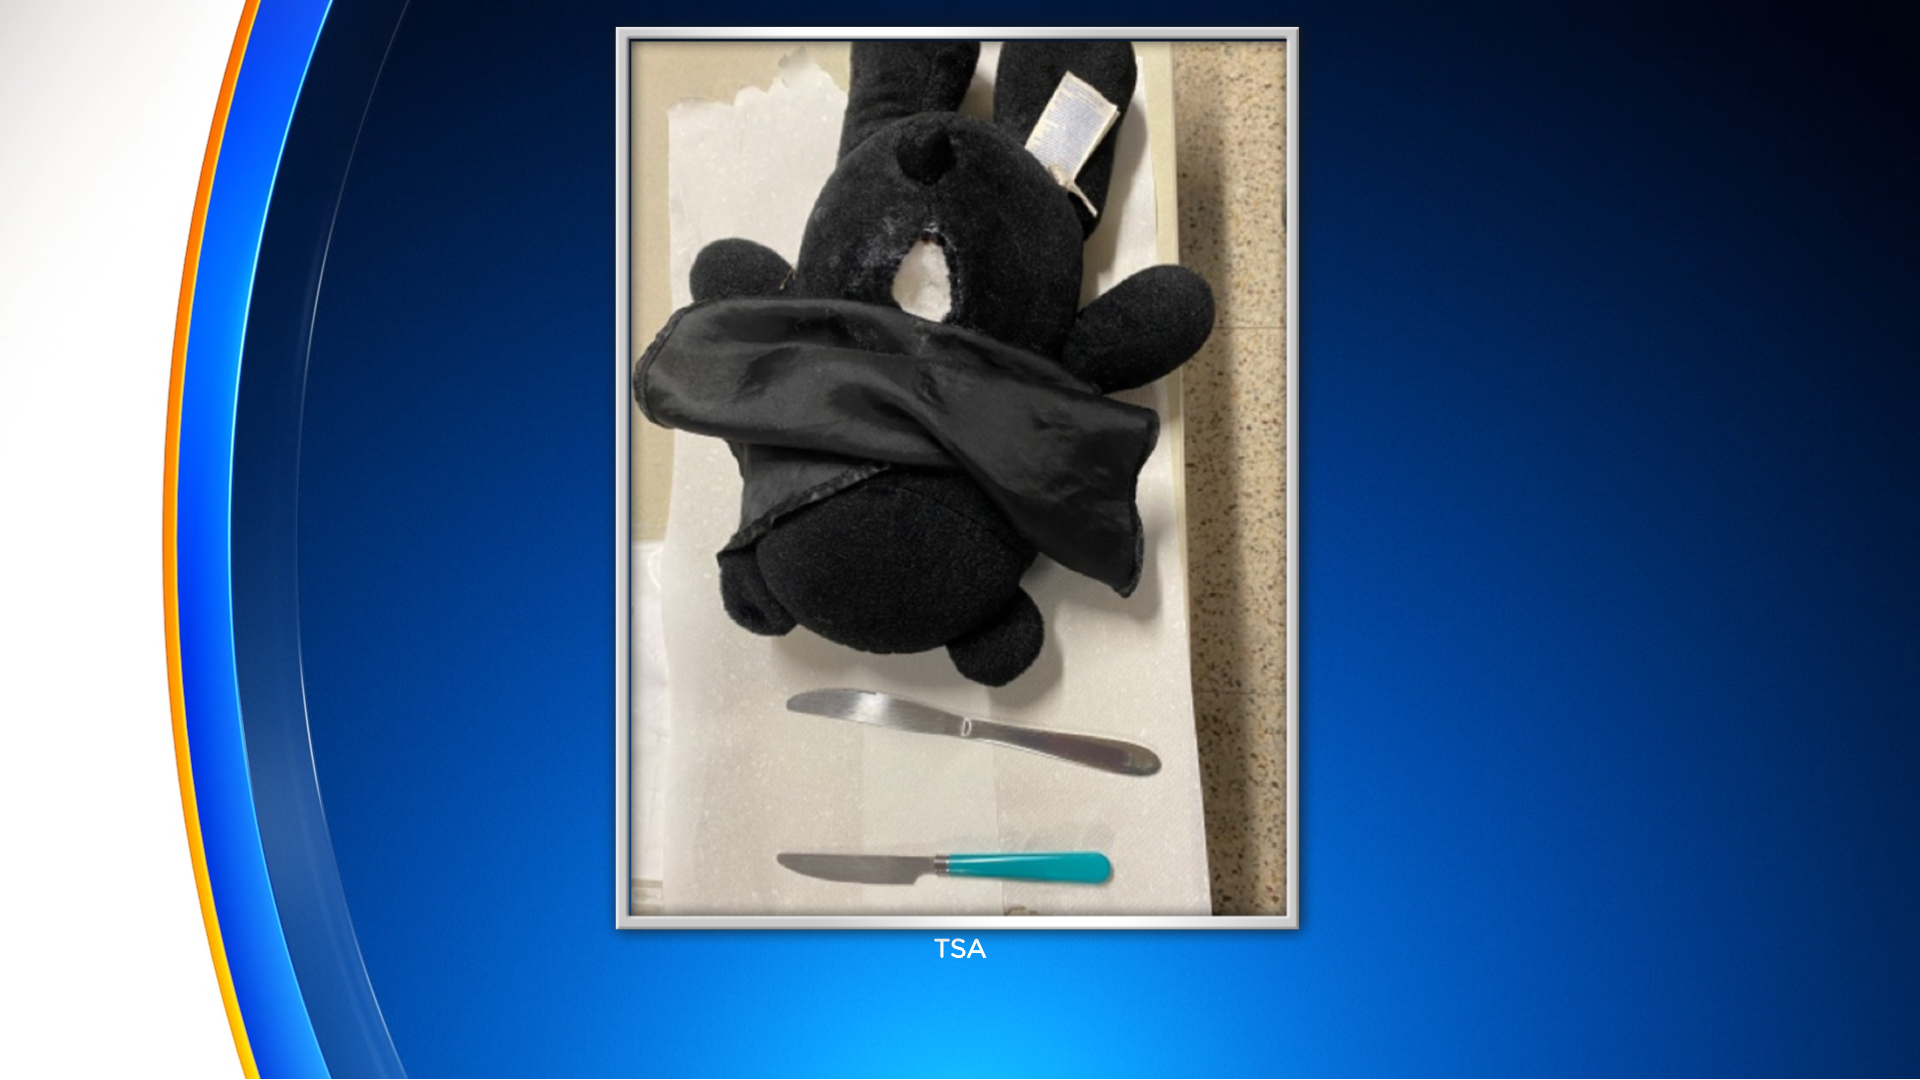 TSA Officers Detect 2 Knives In Stuffed Animal At Philadelphia International Airport